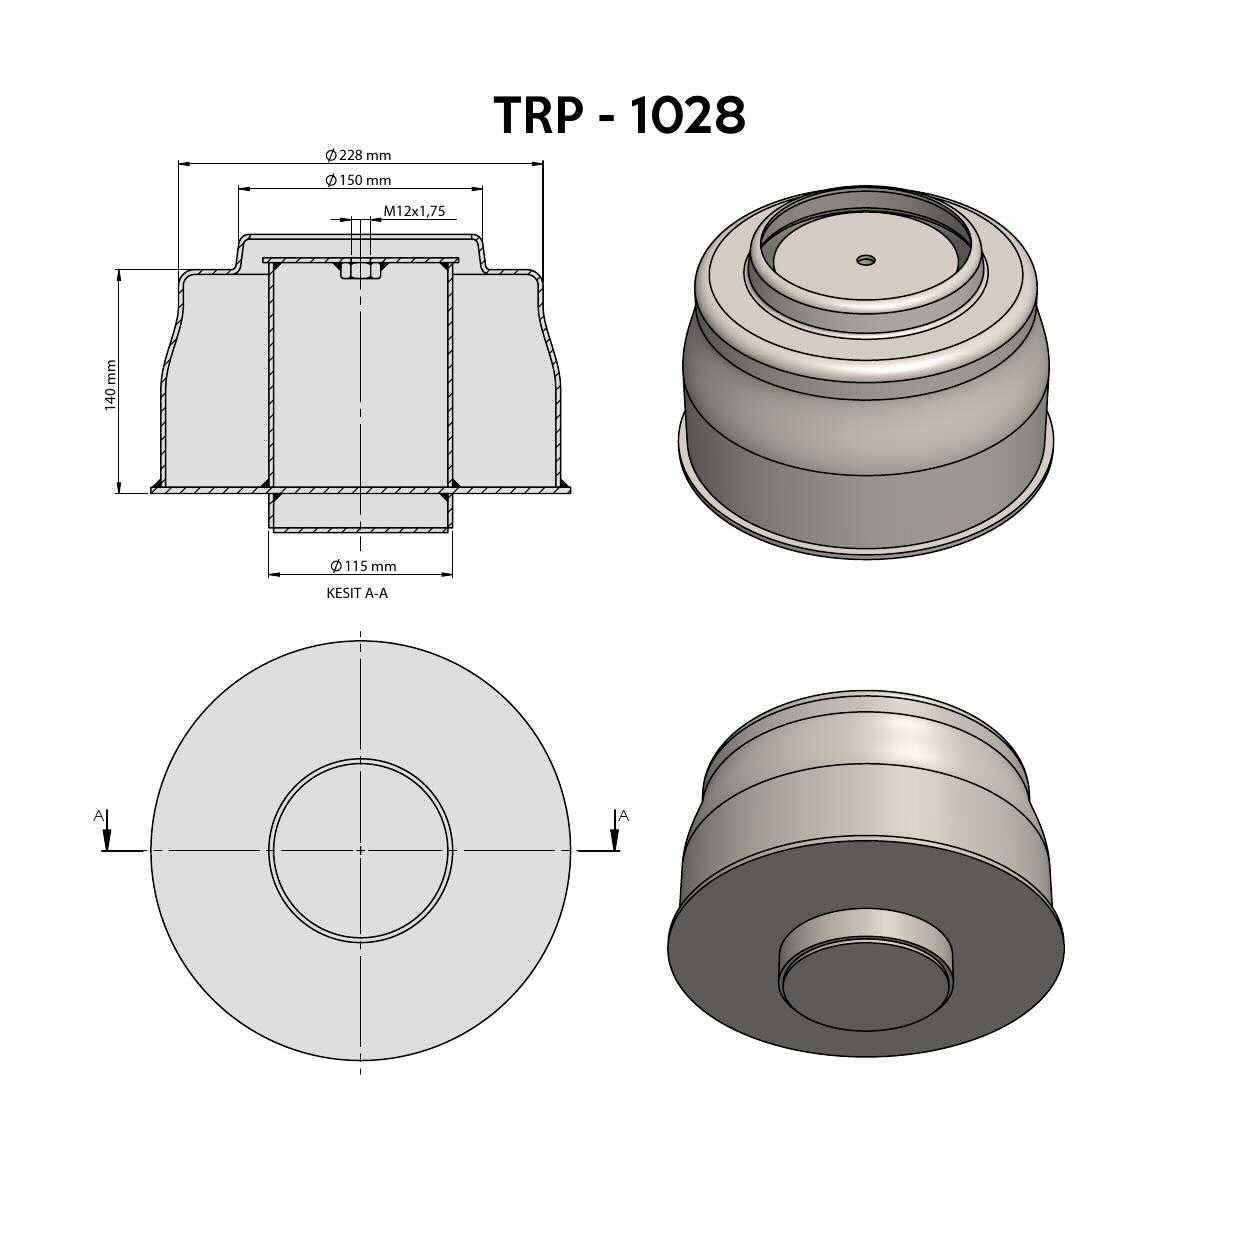 TRP-1028